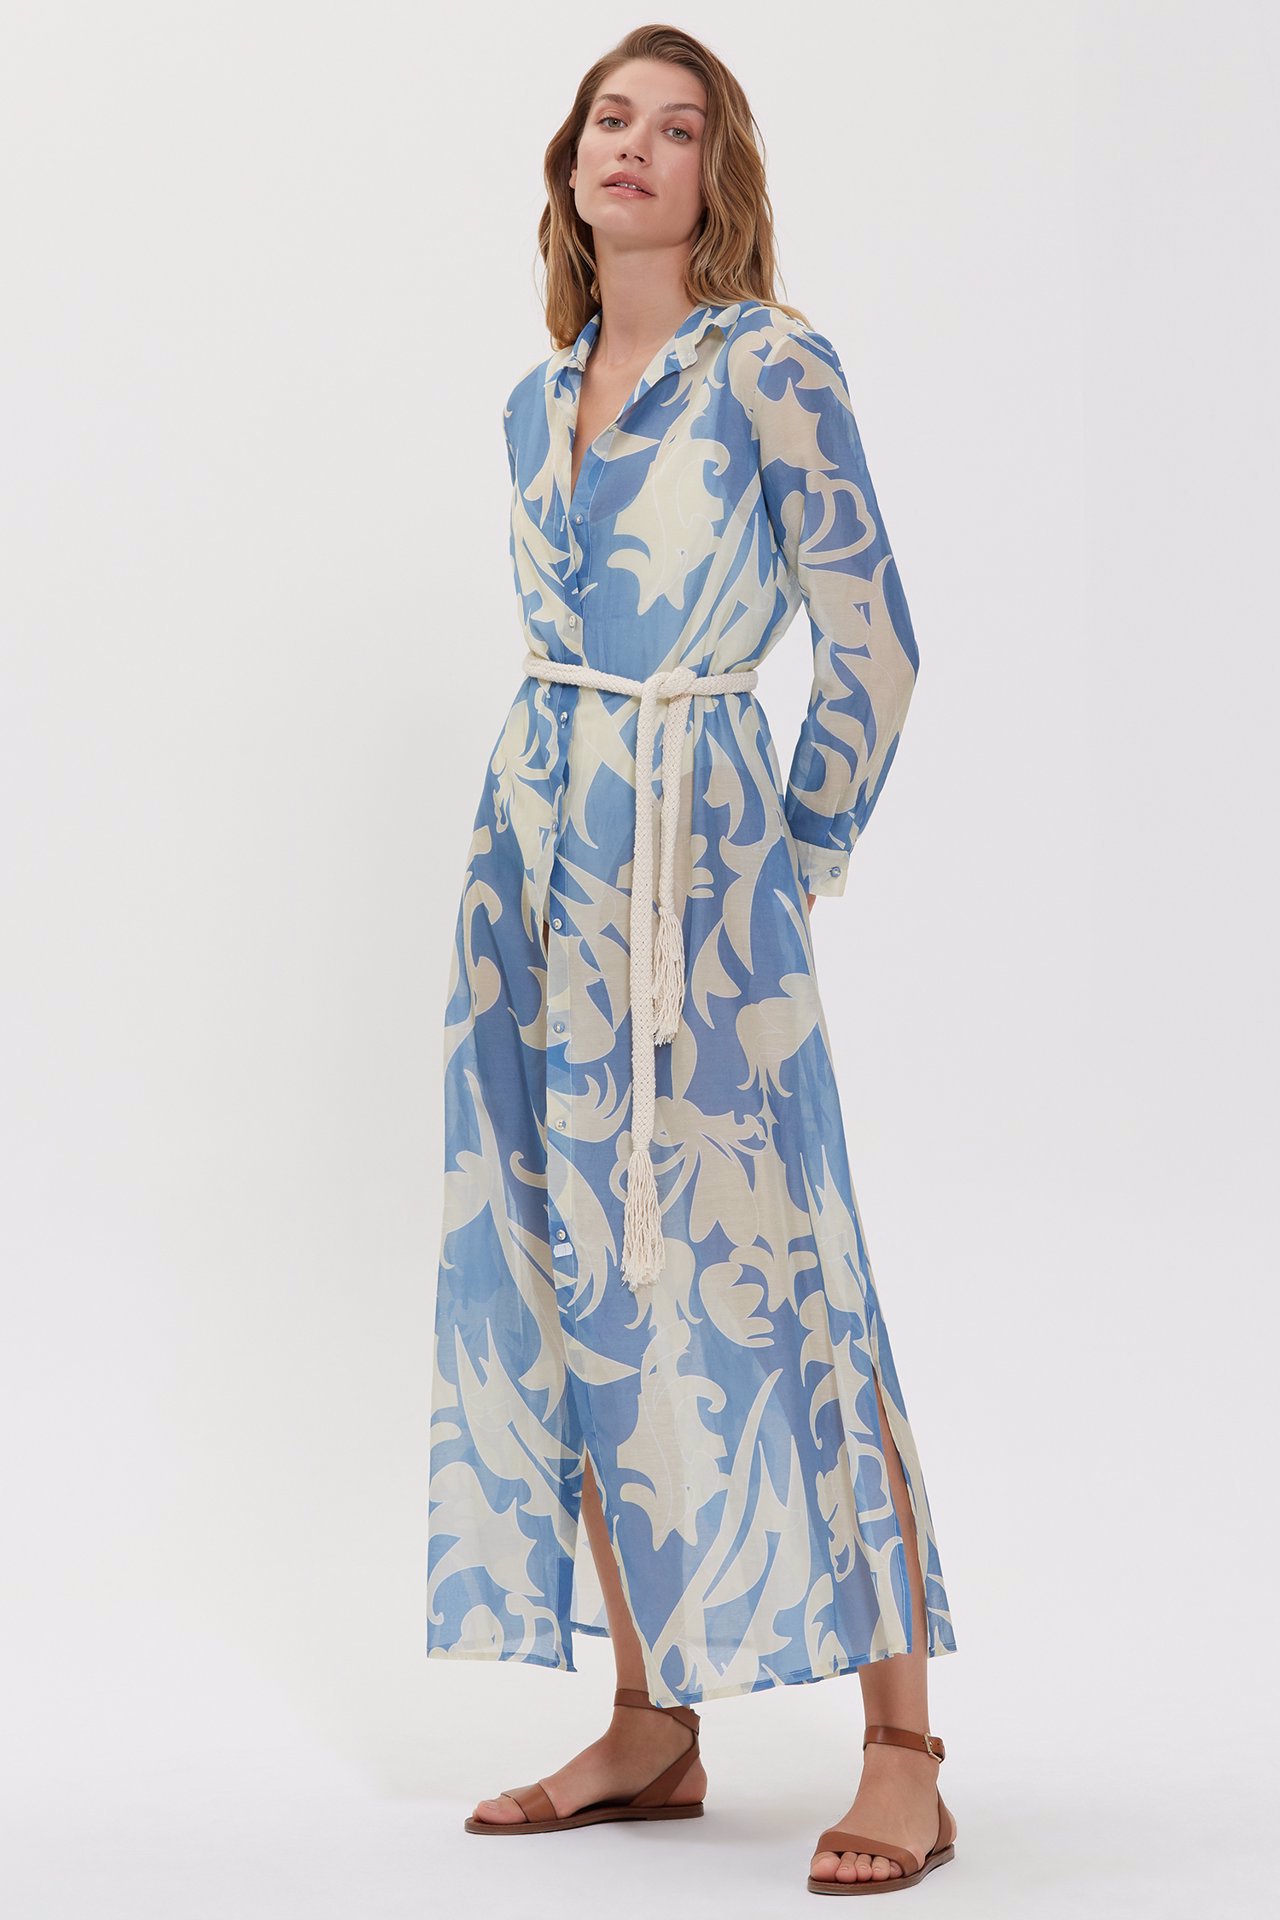 Dahlia Bianca | Donatella Long Shirt Dress - Ekru, Mavi - Maxi Dress